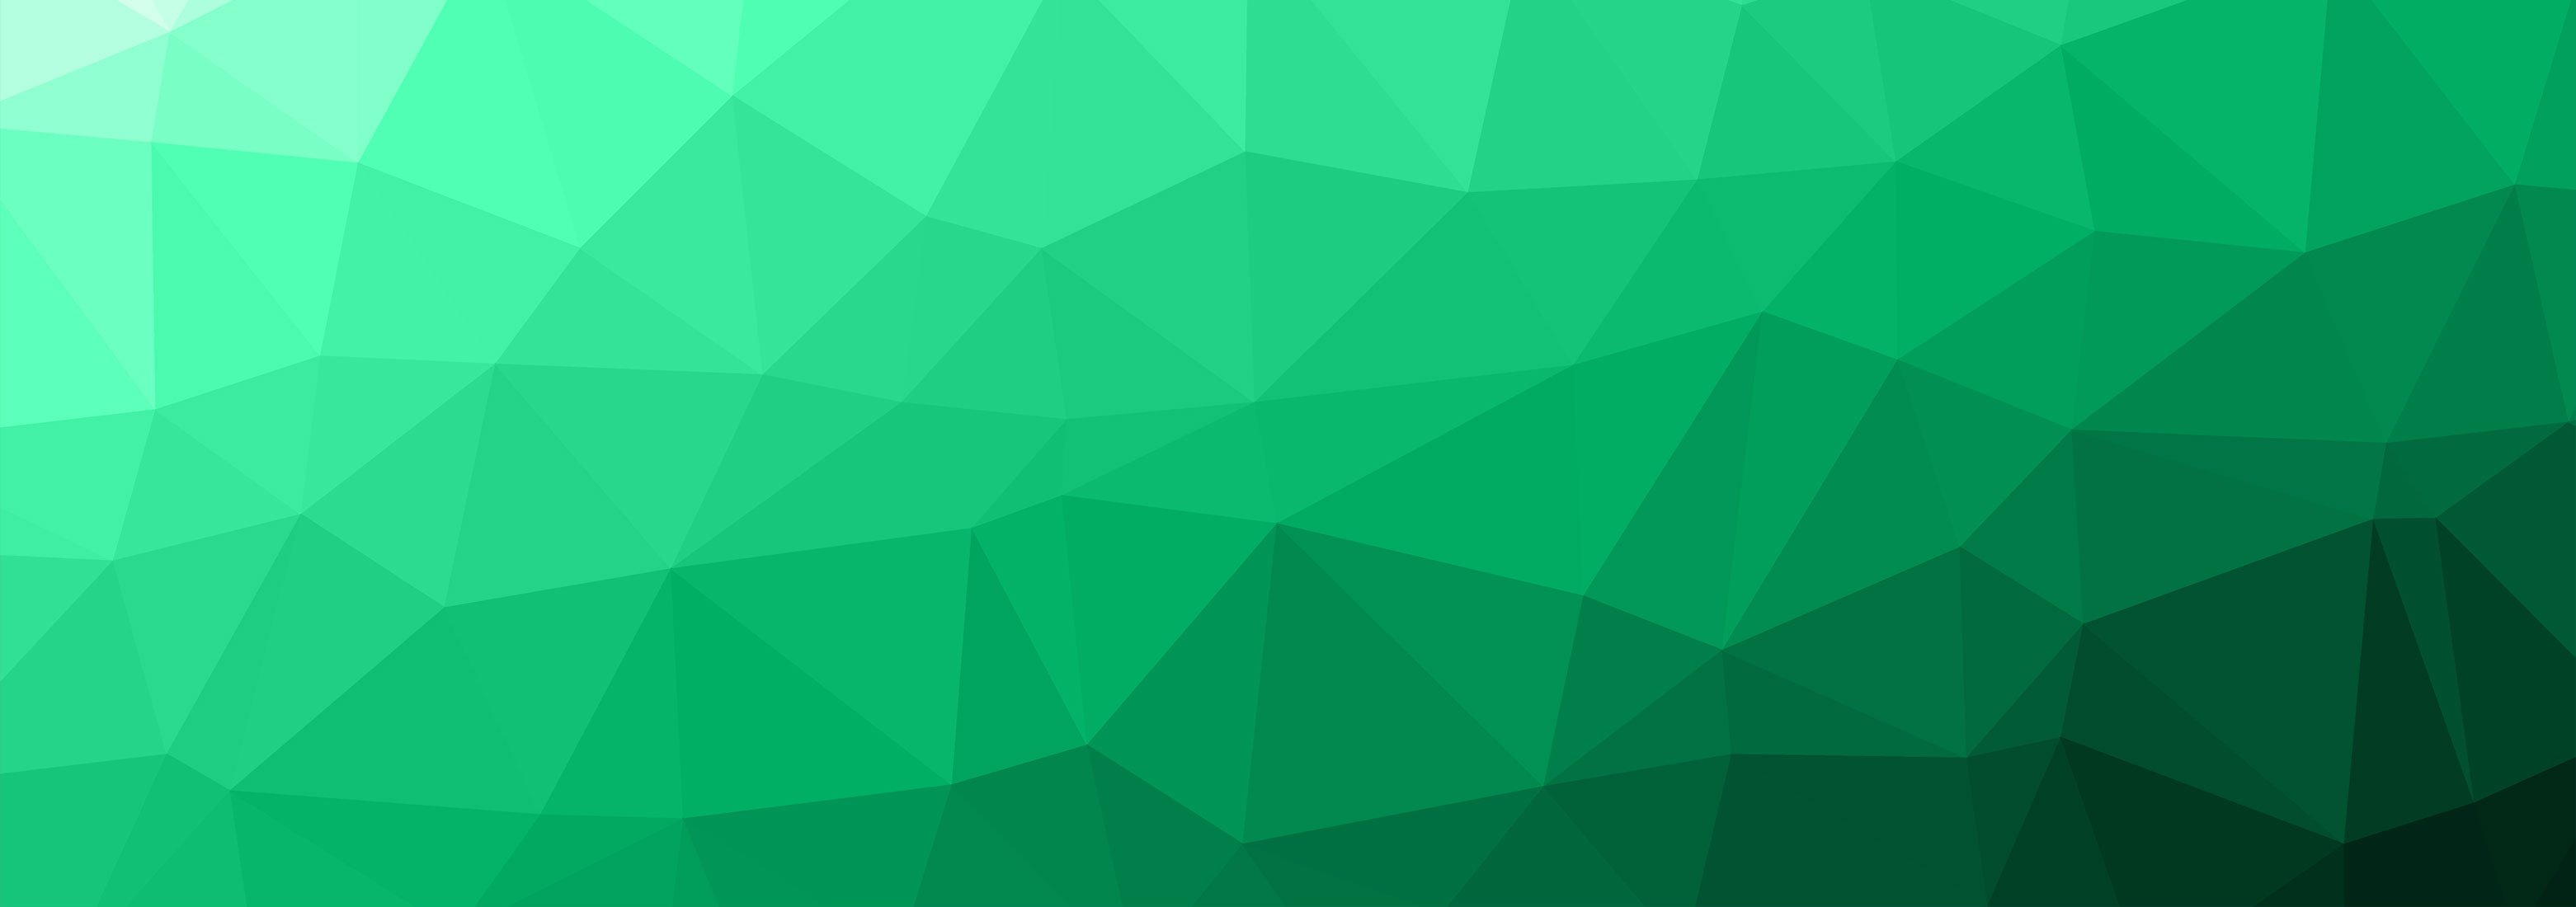 Geometric Green Background